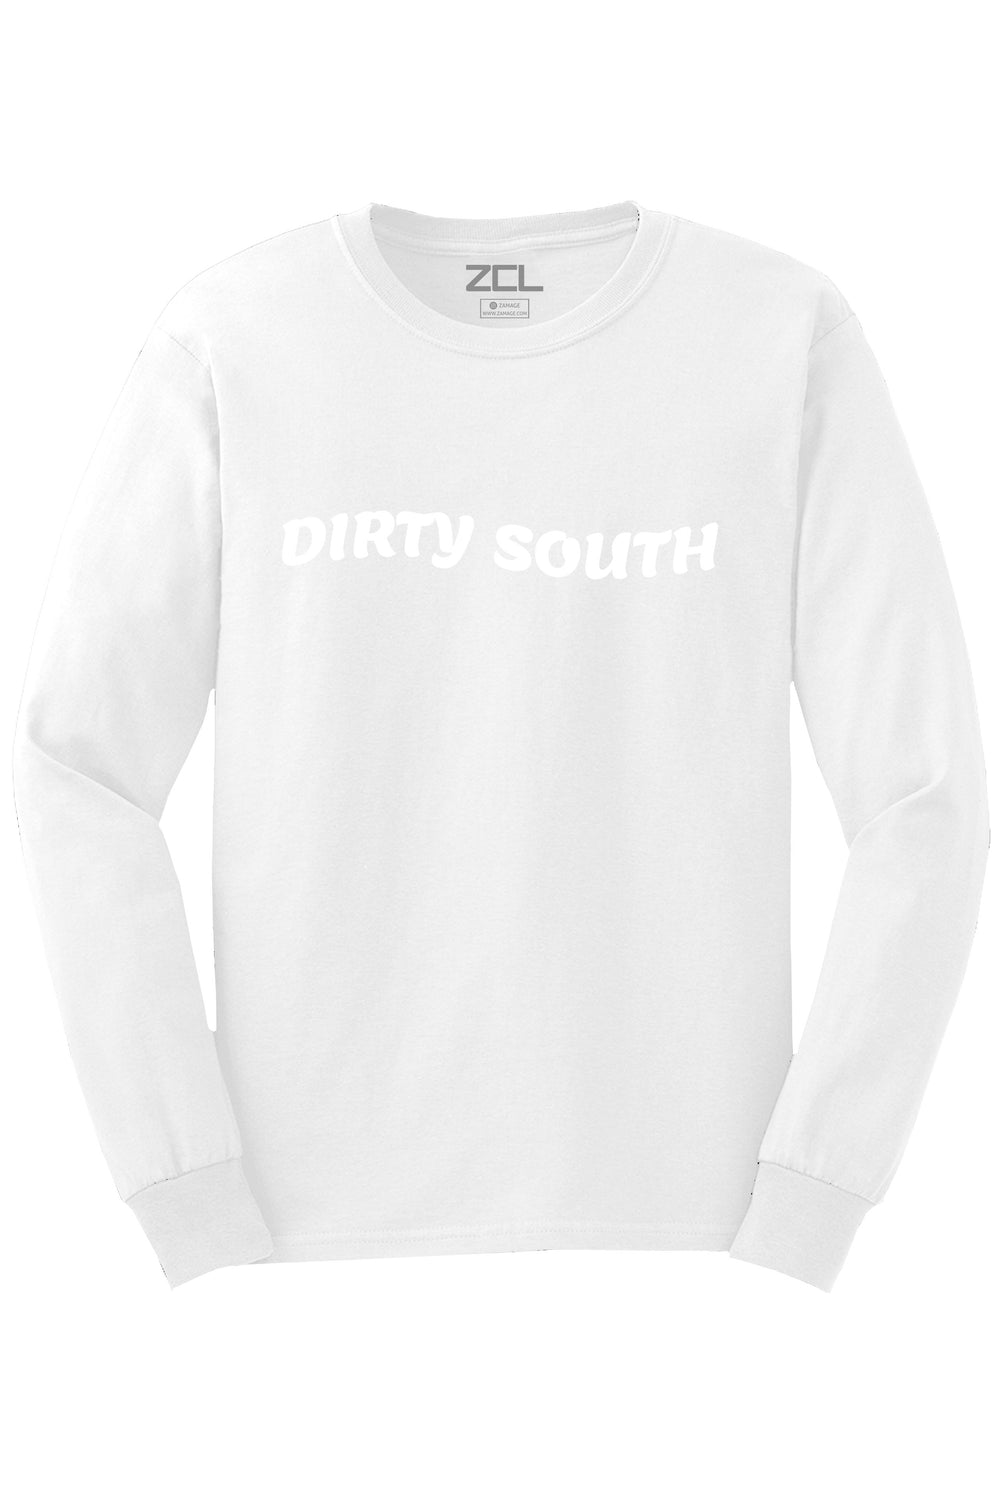 Dirty South Long Sleeve Tee (White Logo) - Zamage